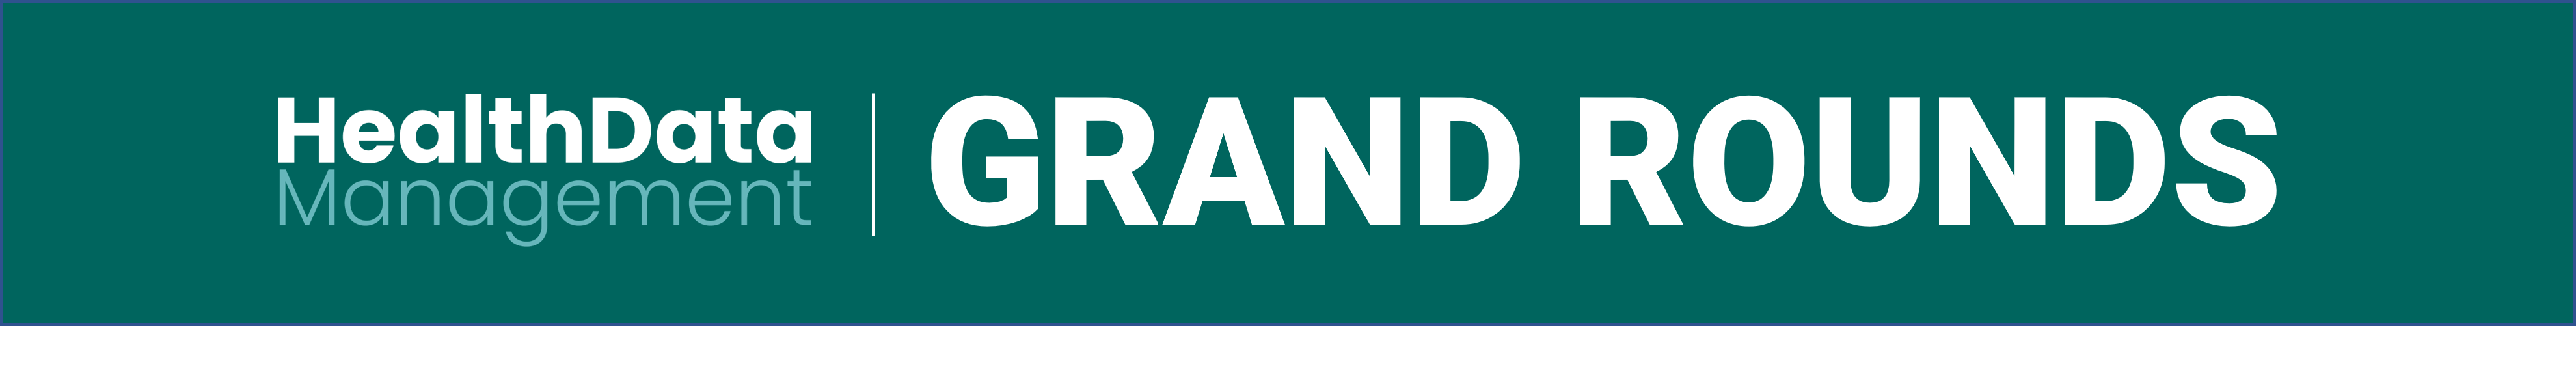 HDM GrandRounds logo